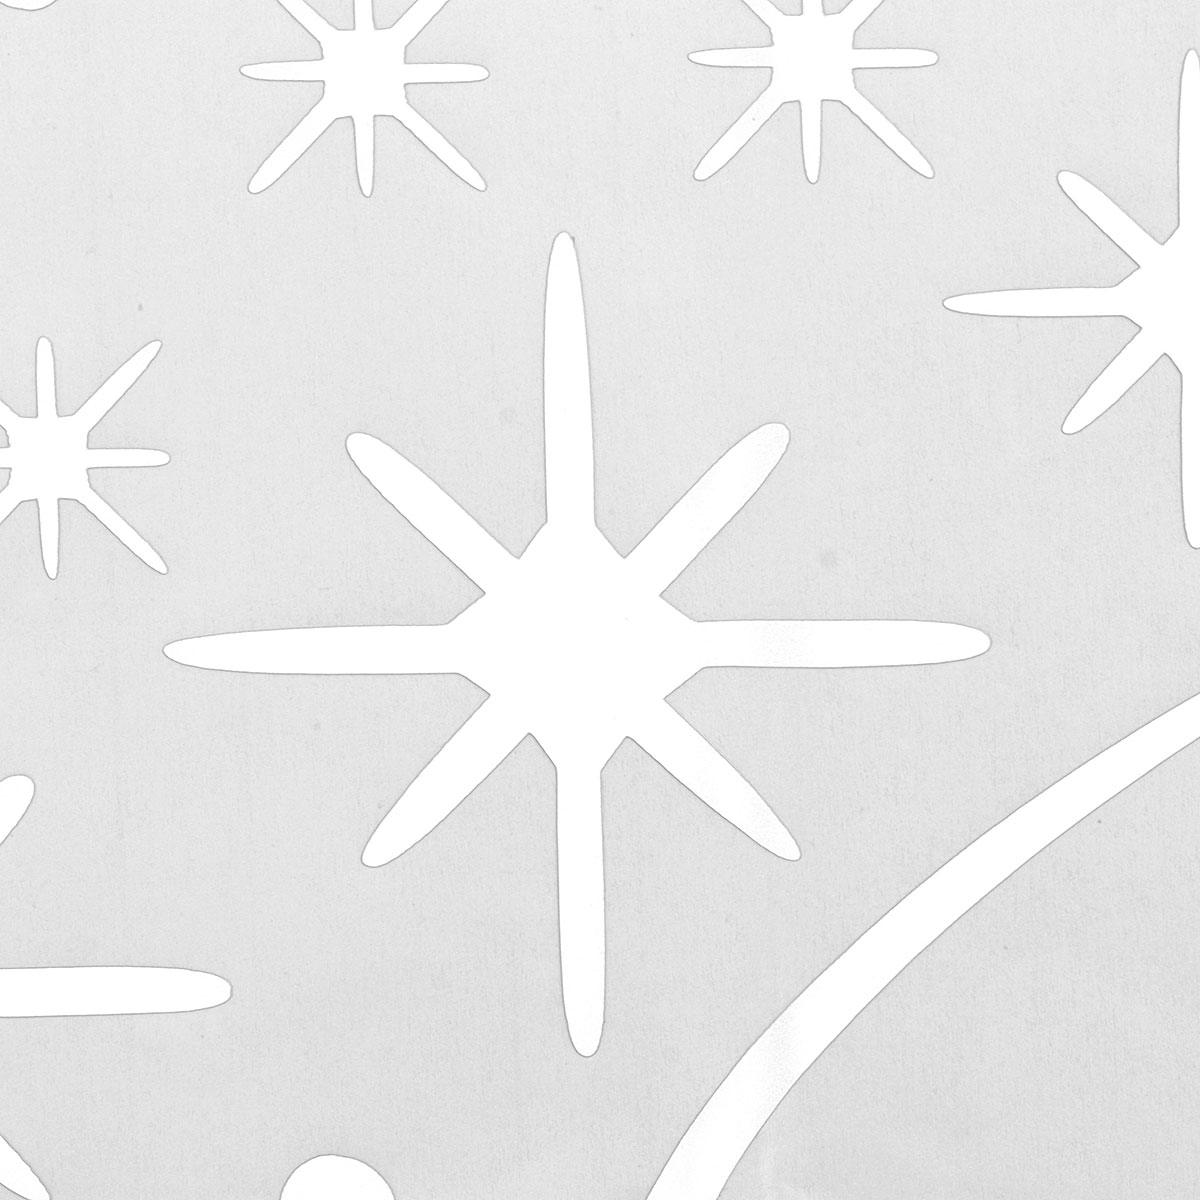 Merry-Christmas-Snowflake-Window-Wall-Sticker-Wall-Window-Decoration-1004664-12